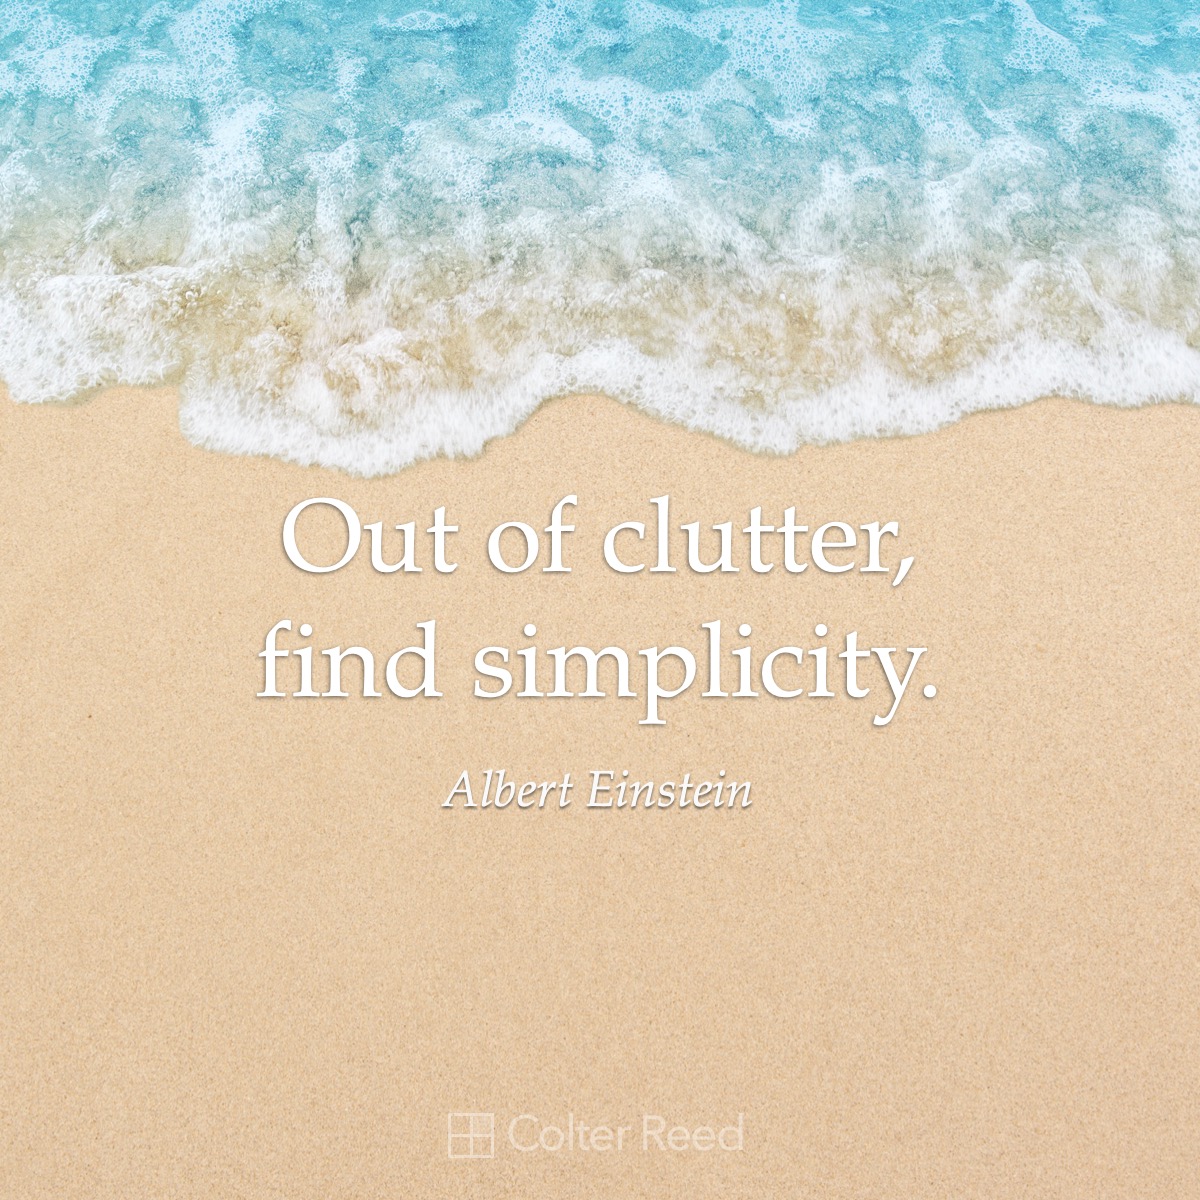 Out of clutter, find simplicity. —Albert Einstein